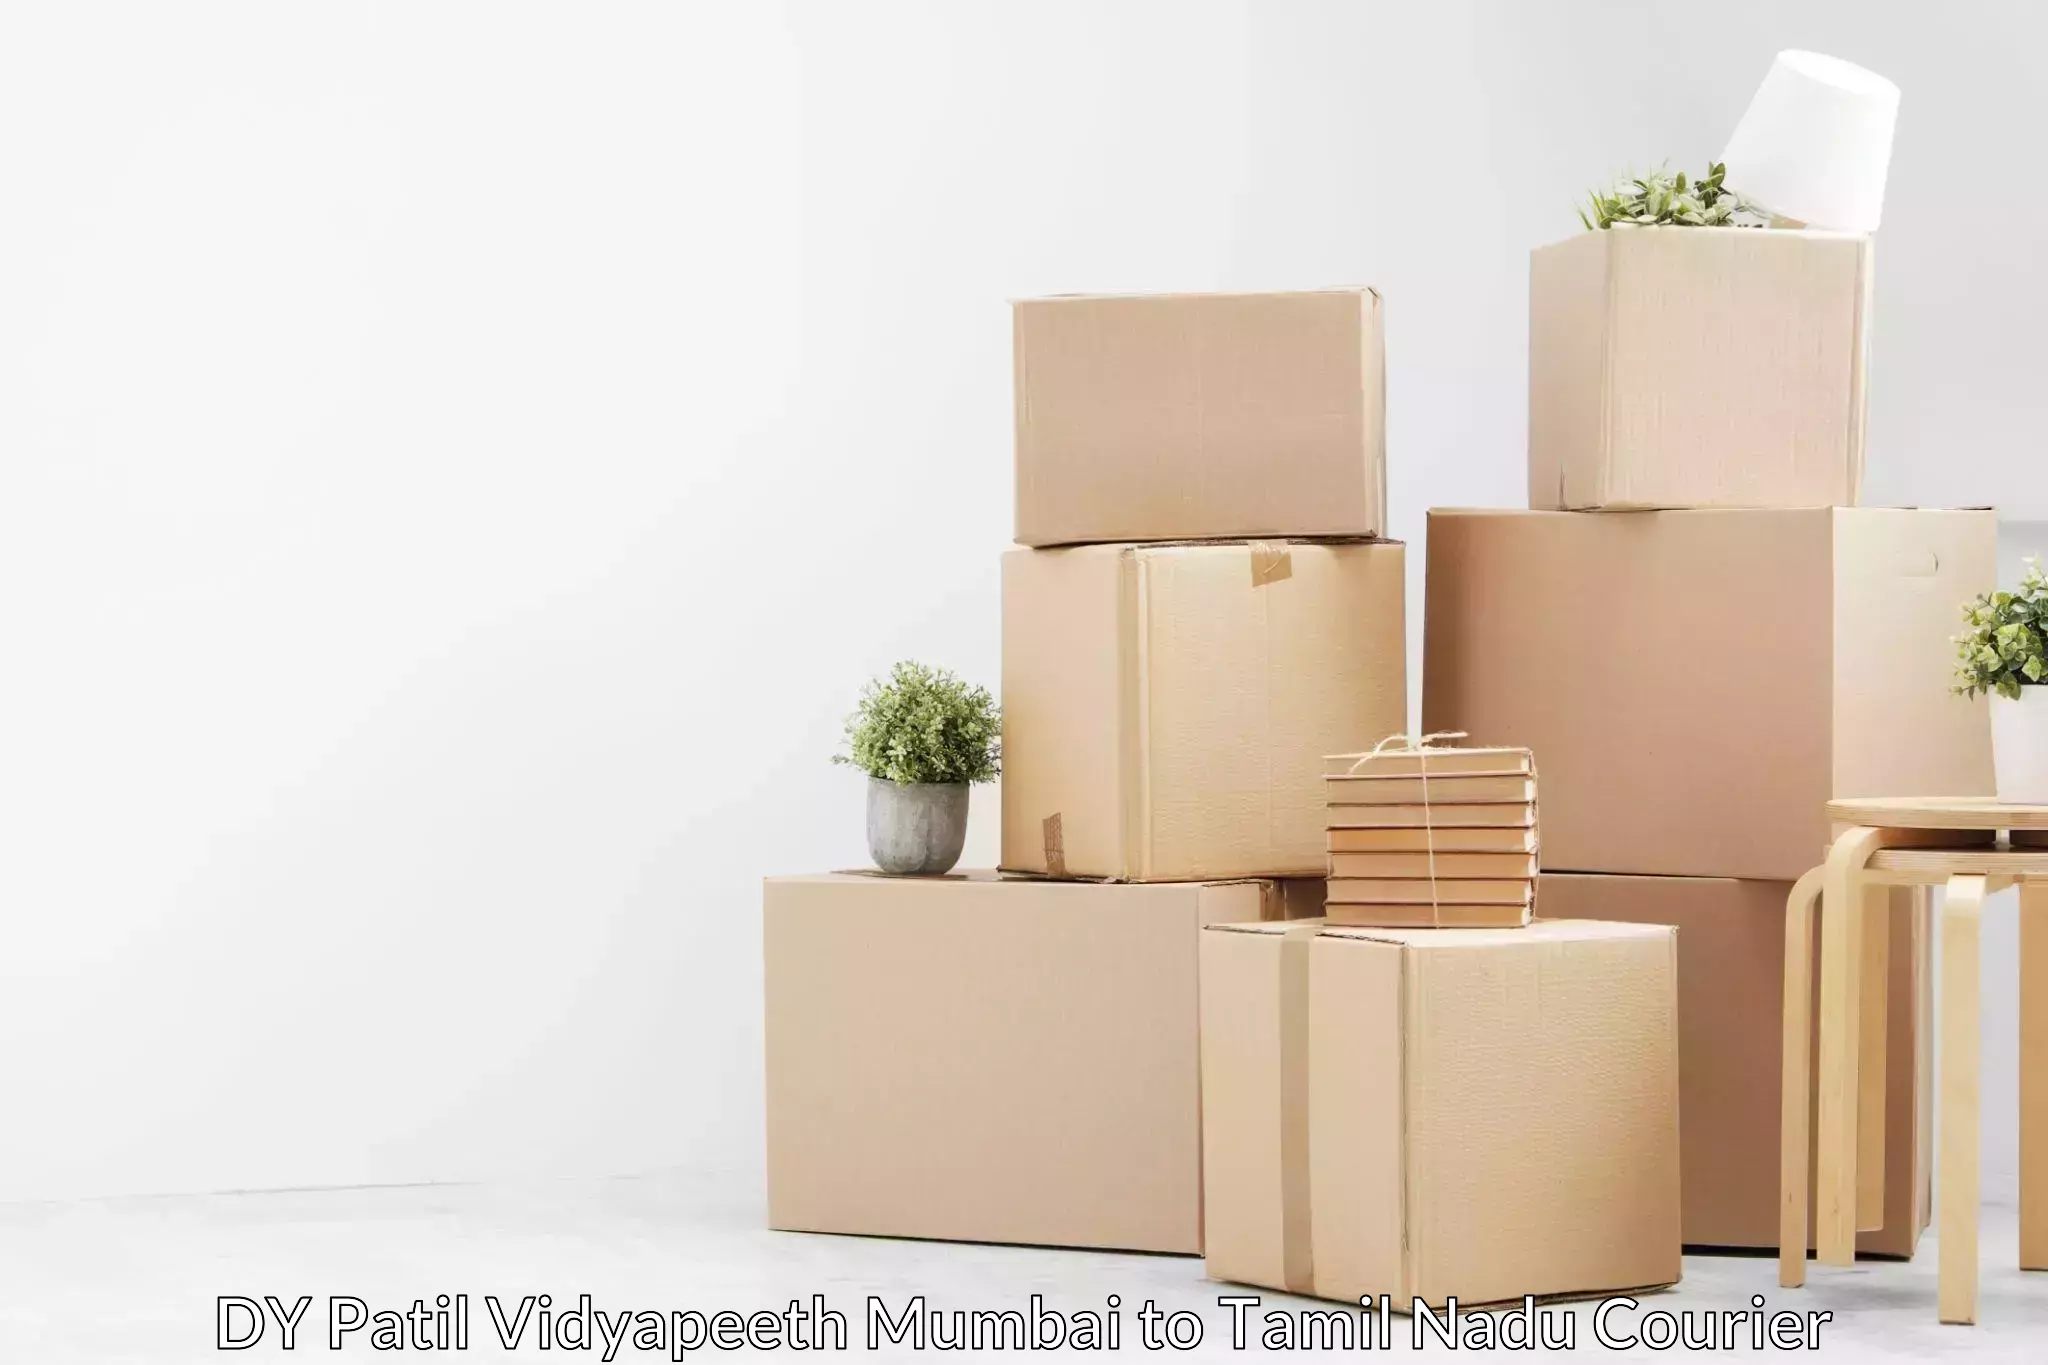 Professional movers DY Patil Vidyapeeth Mumbai to Tamil Nadu